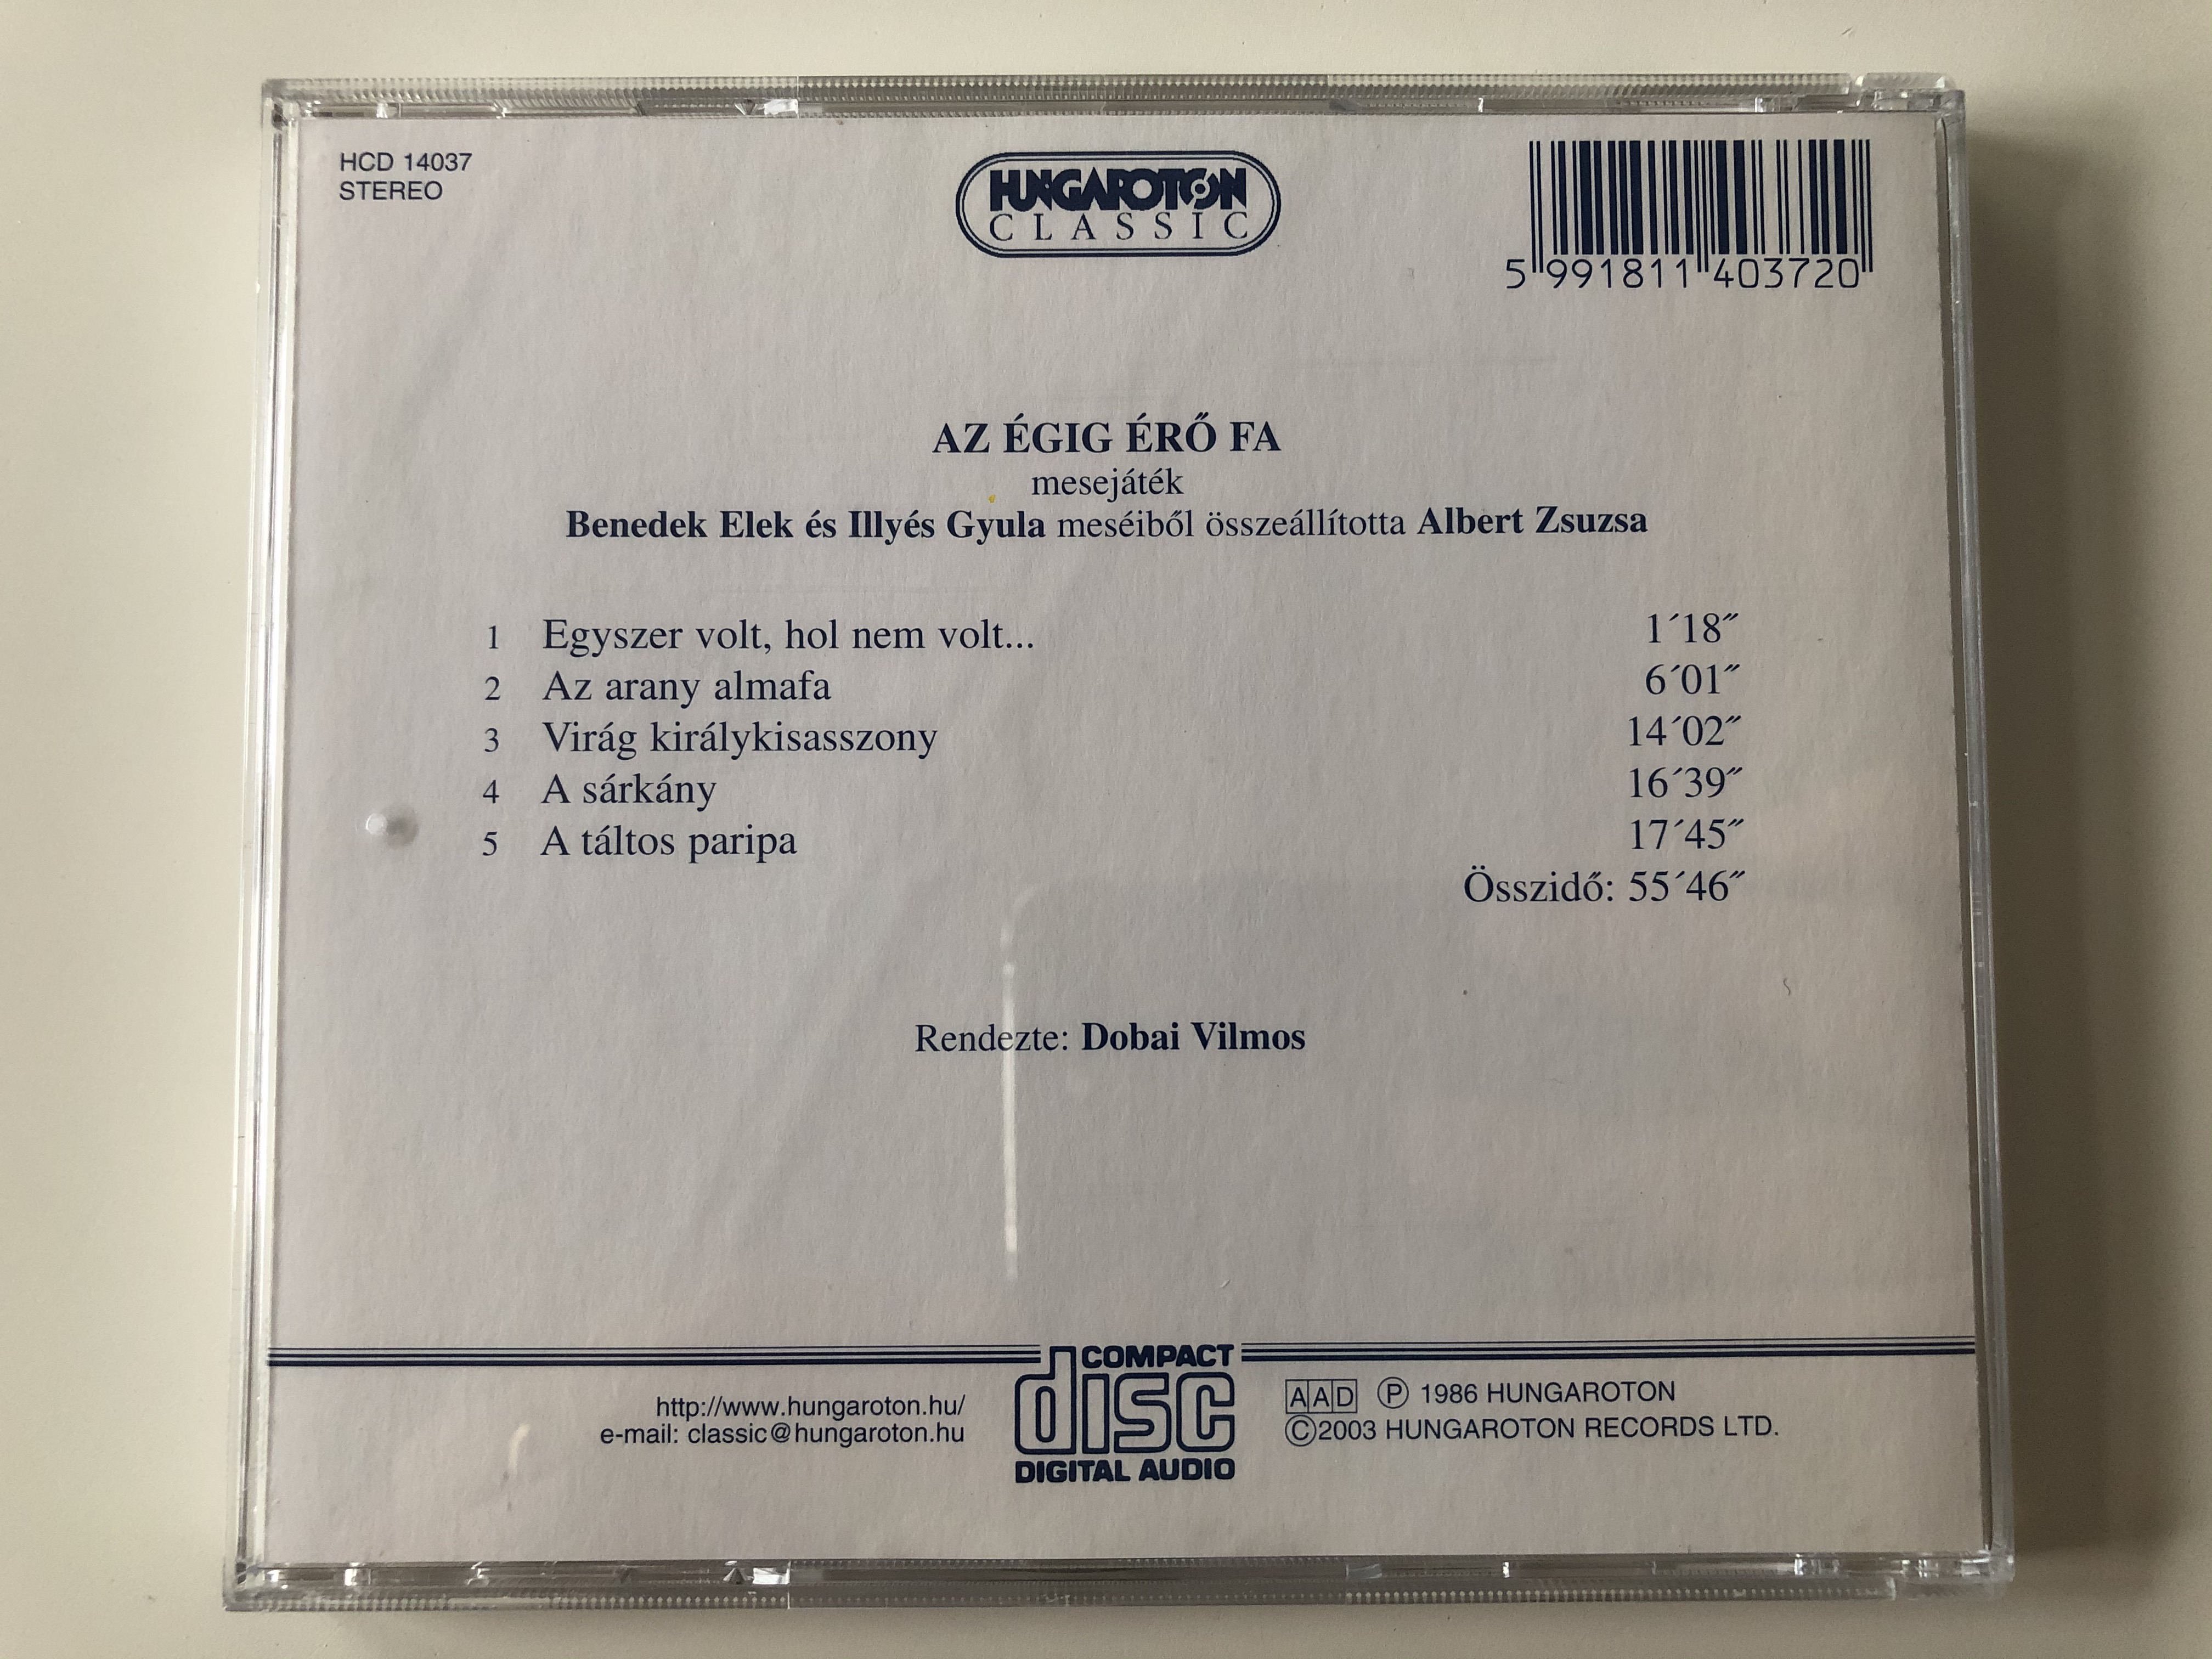 az-gig-r-fa-mesej-t-k-hungaroton-classic-audio-cd-2003-stereo-hcd-14037-4-.jpg